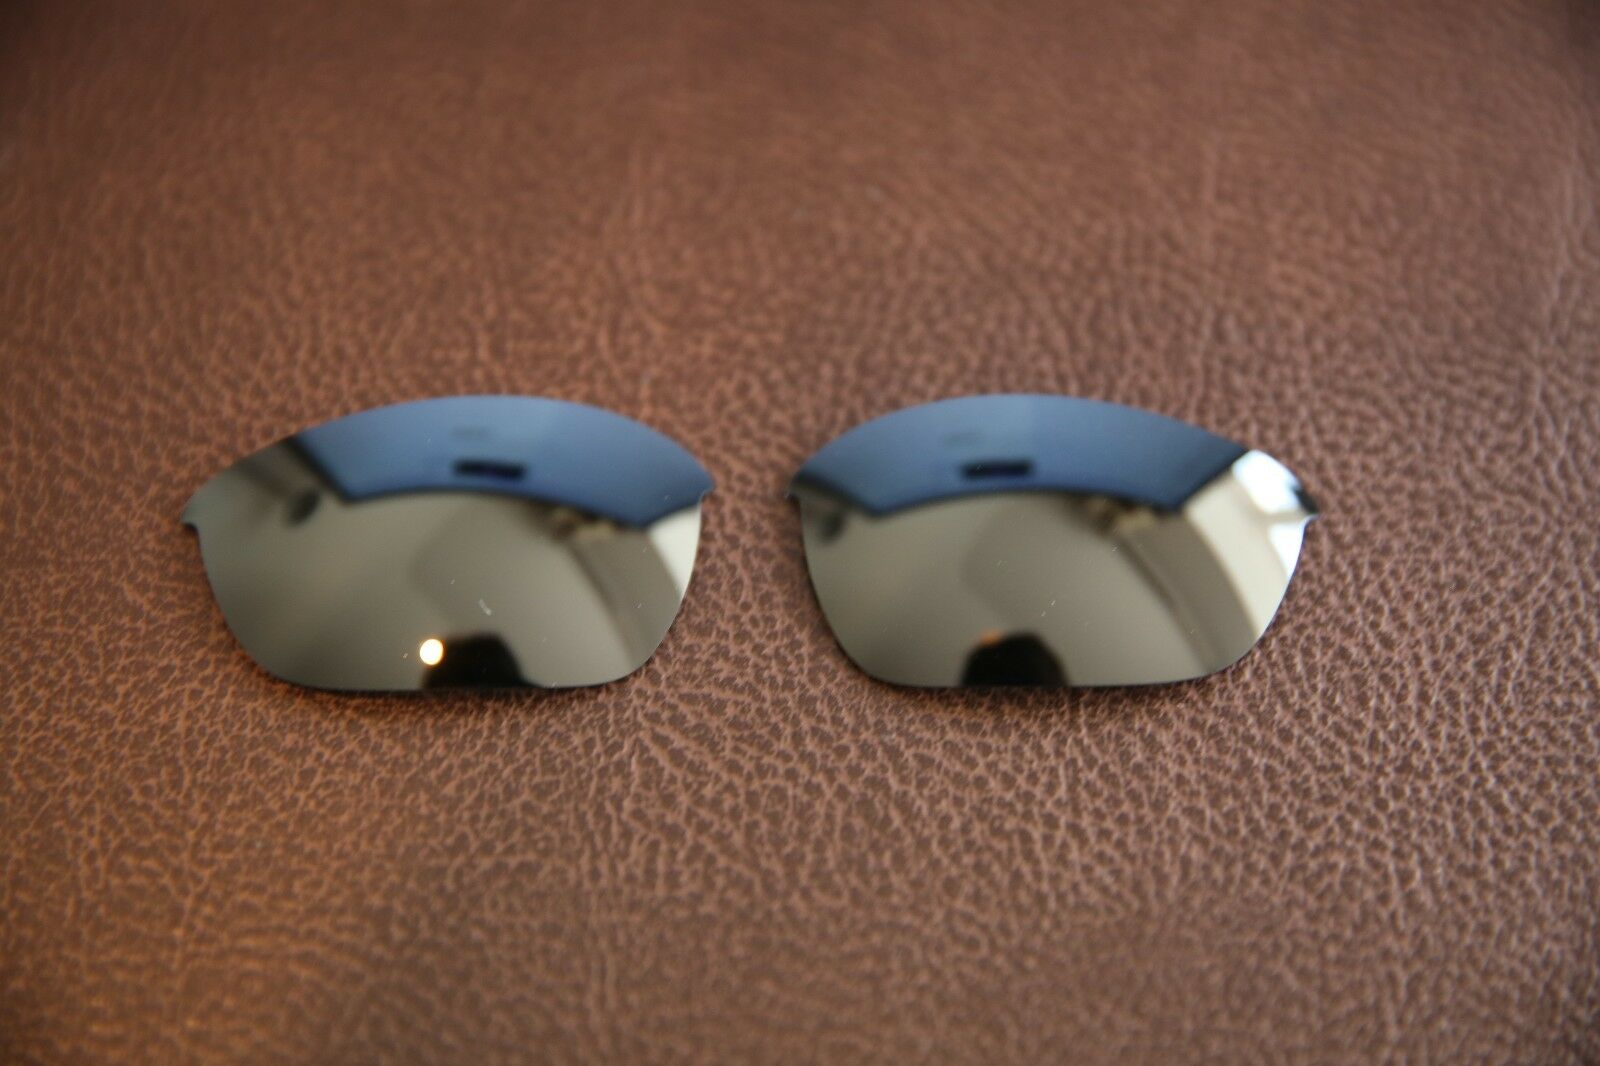 PolarLens POLARIZED Black Replacement Lens for-Oakley Half Jacket 2.0 sunglasses